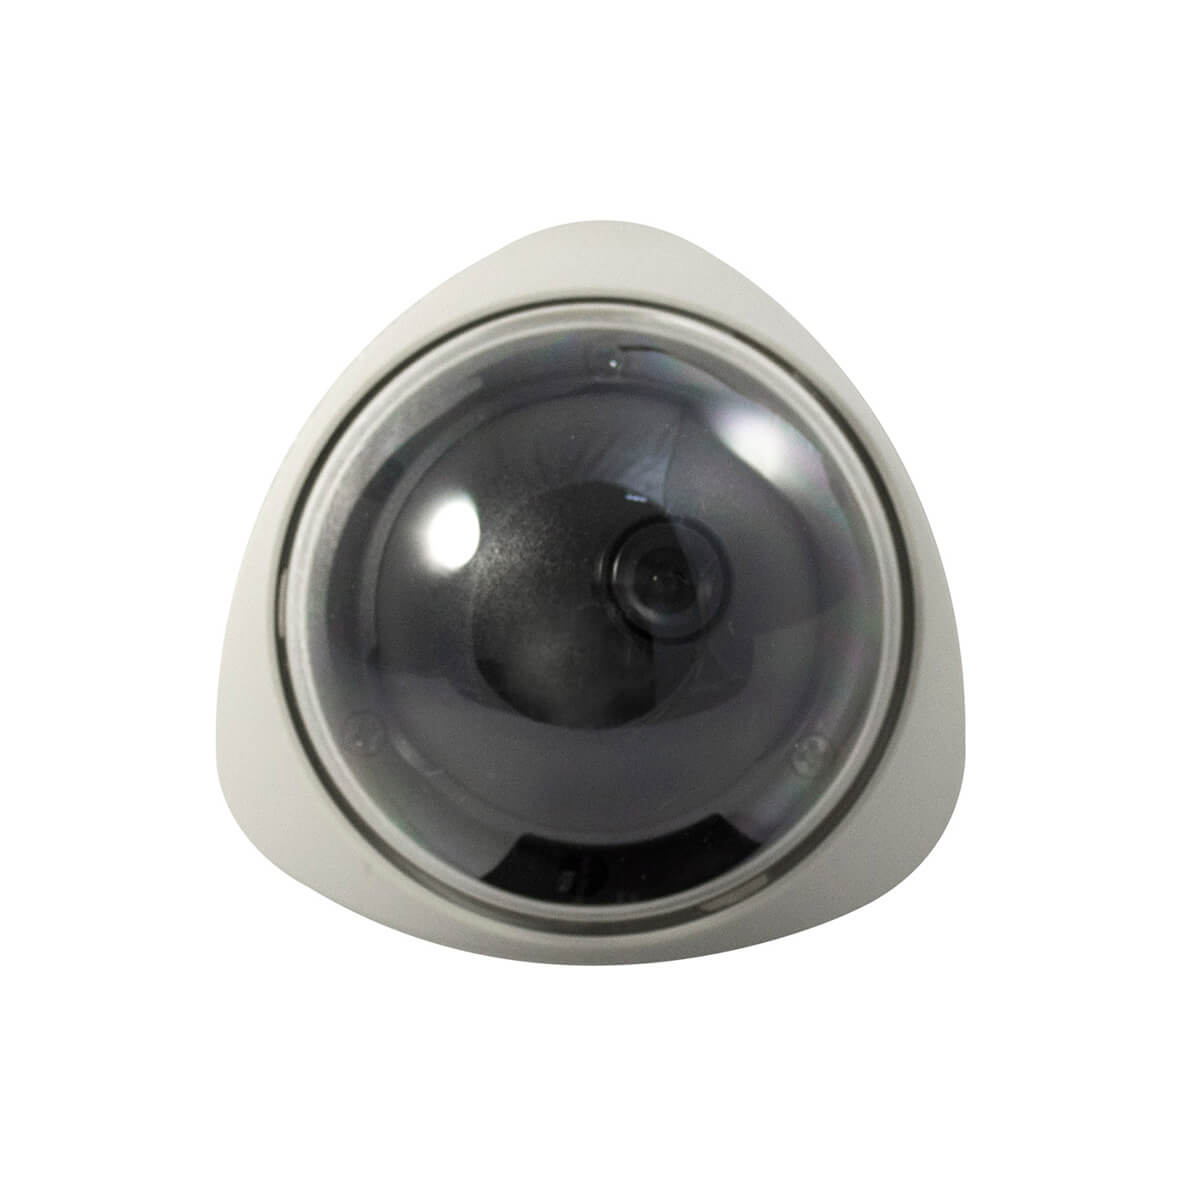 Camara tipo domo, Sensor CMOS 1/3, resolucion 800TVL, lente de 3.6mm